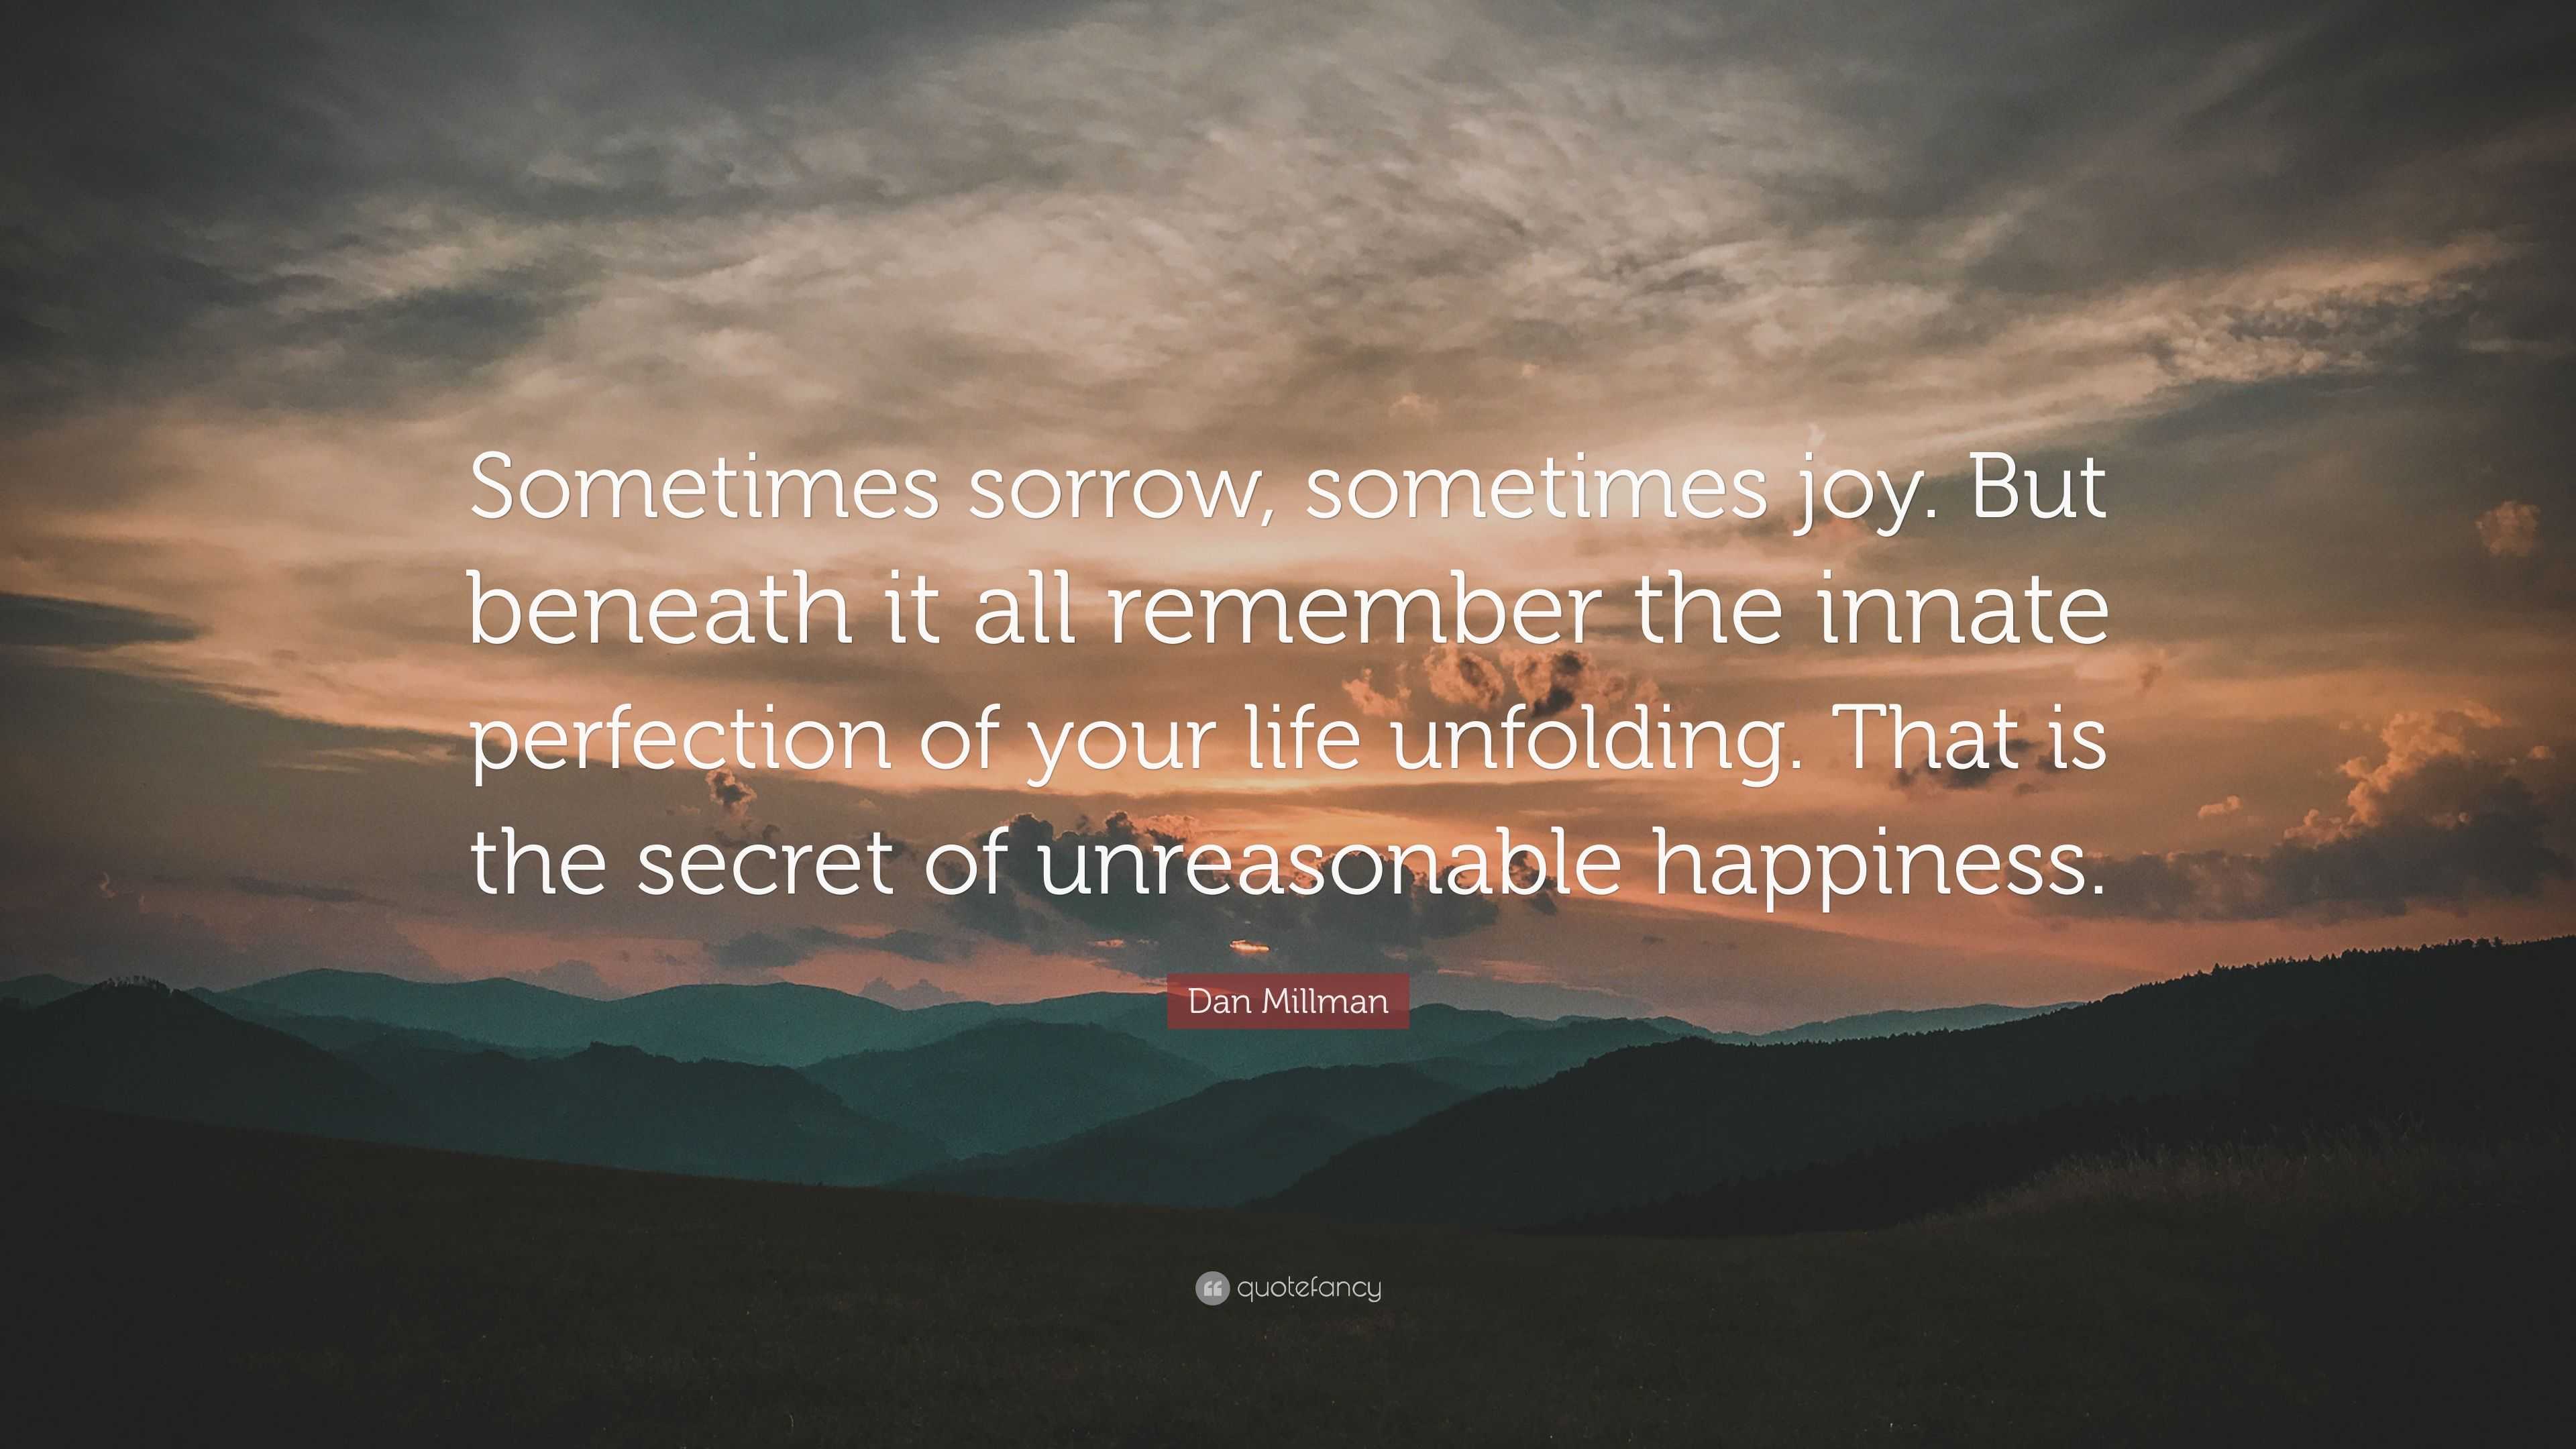 Dan Millman Quote “sometimes Sorrow Sometimes Joy But Beneath It All